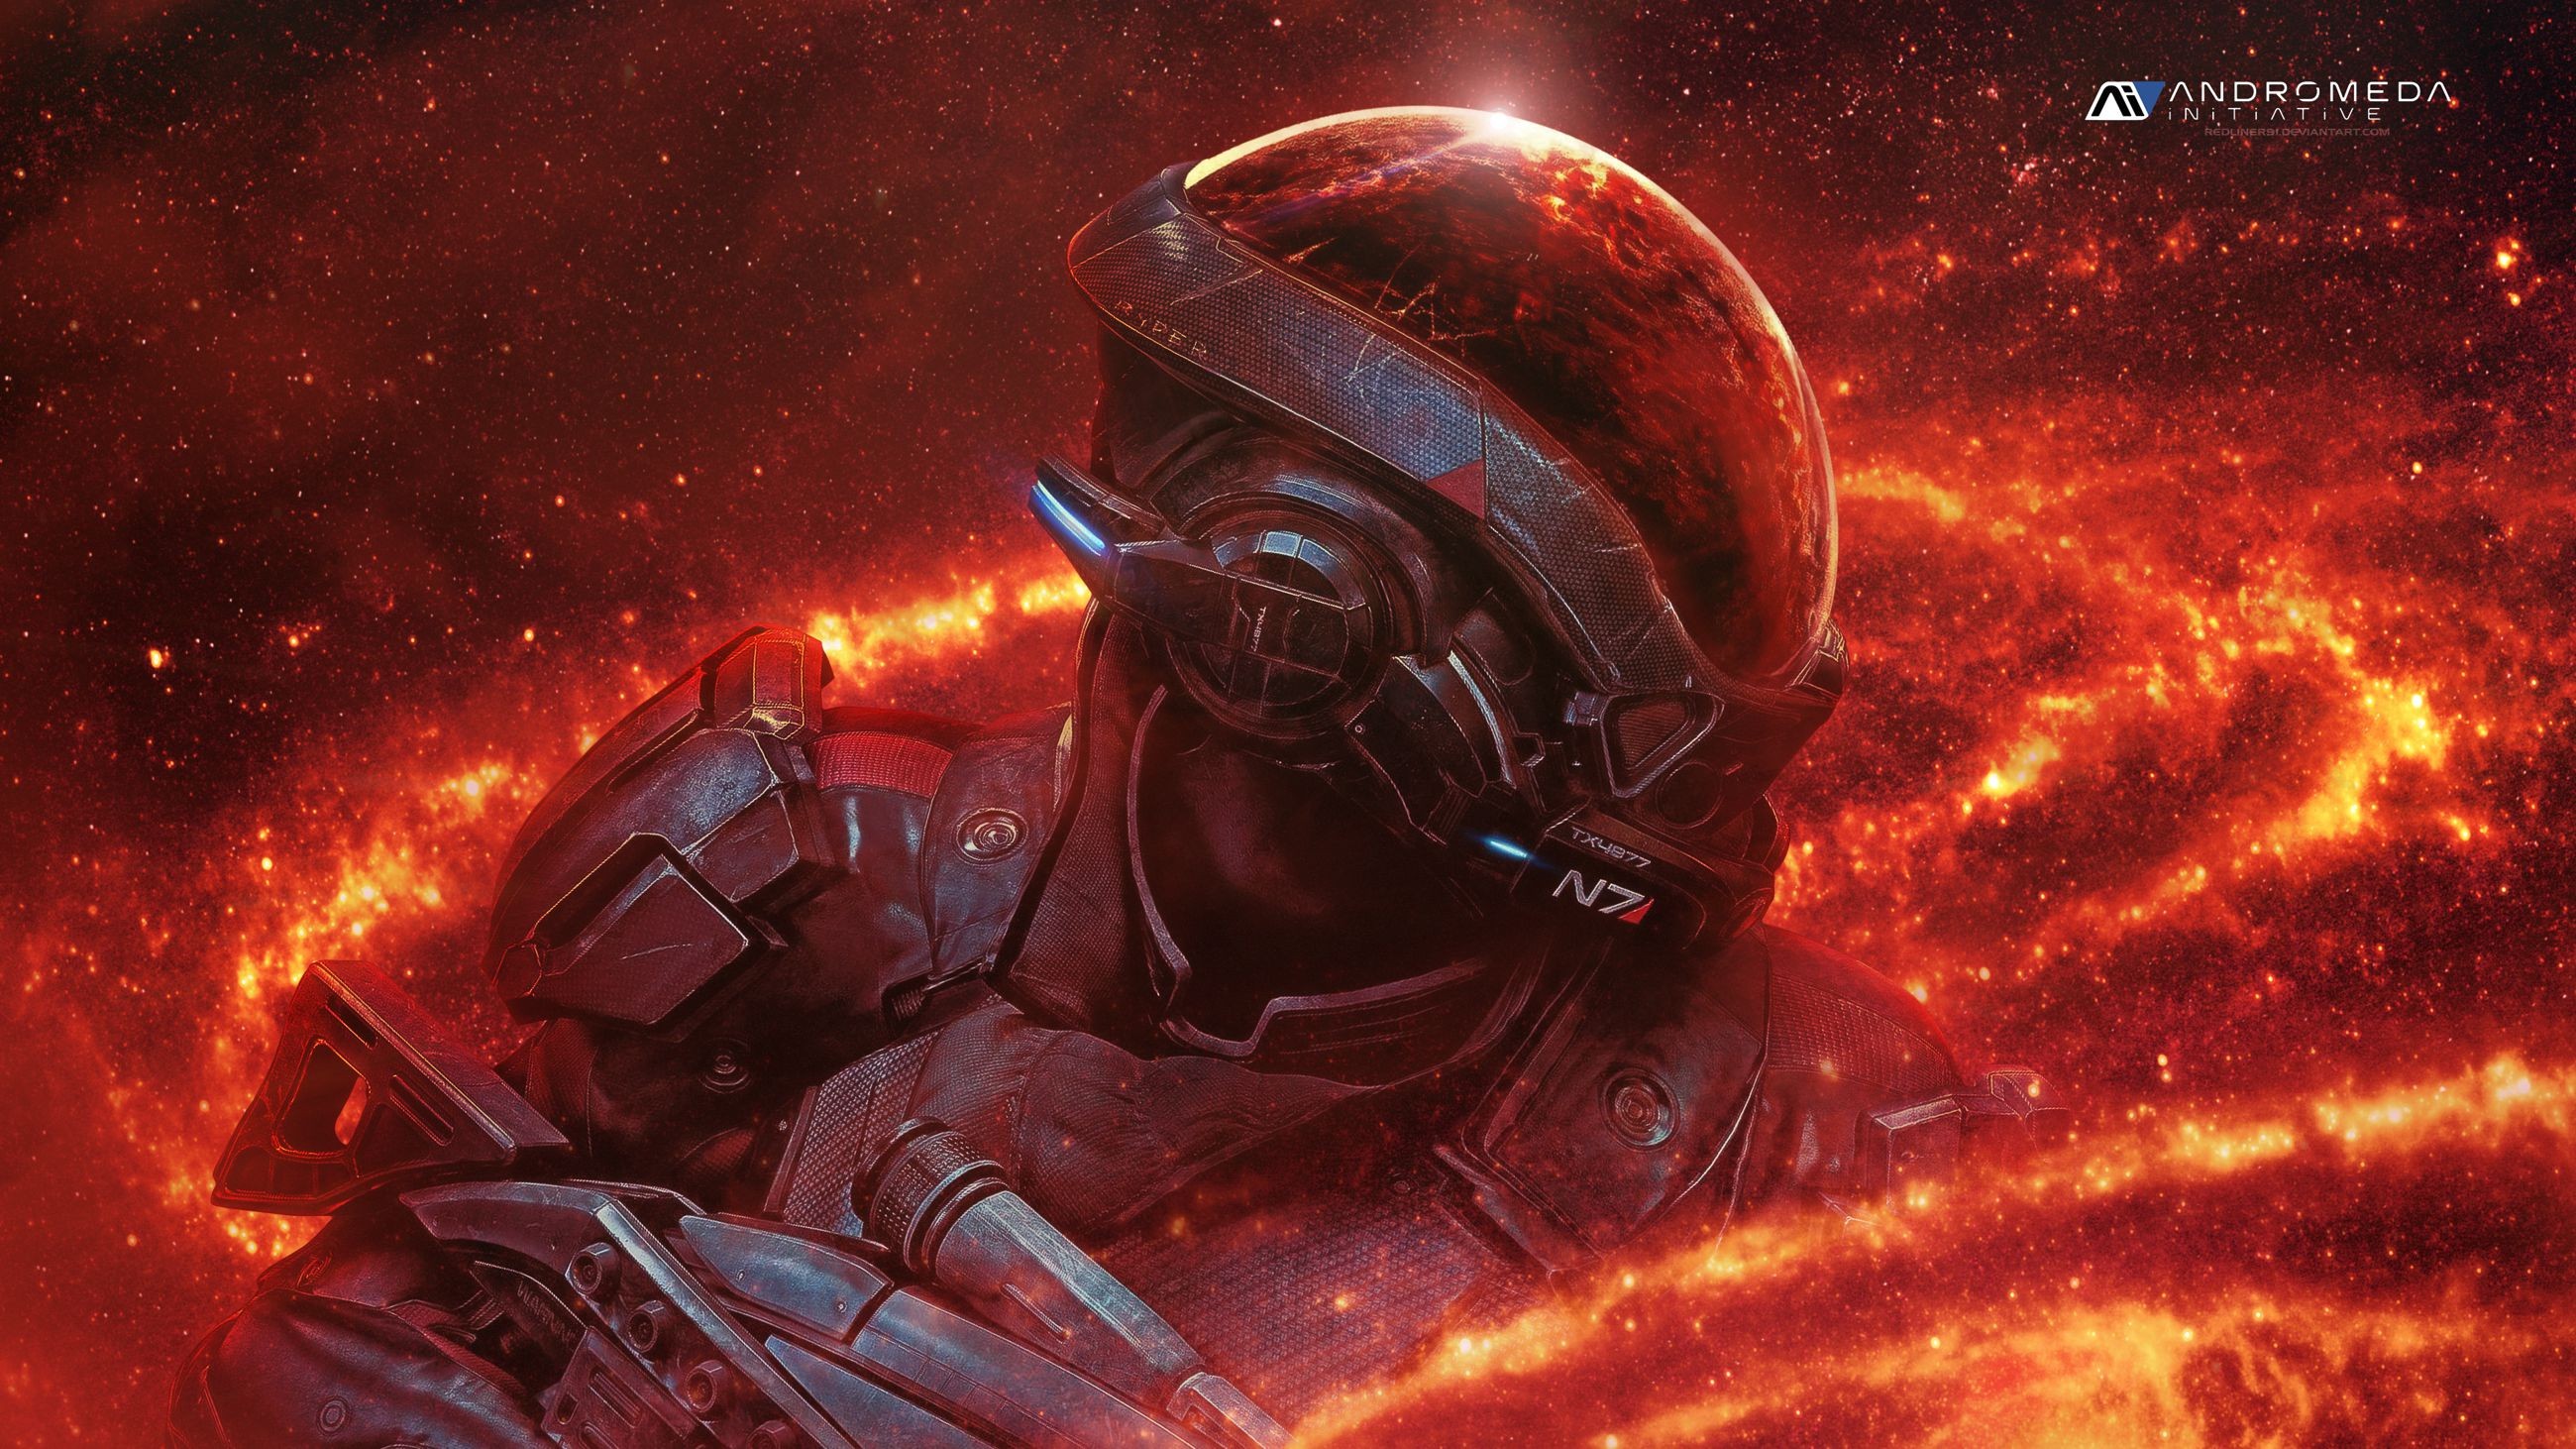 Andromeda Initiative Mass Effect Andromeda Ryder 2600x1462